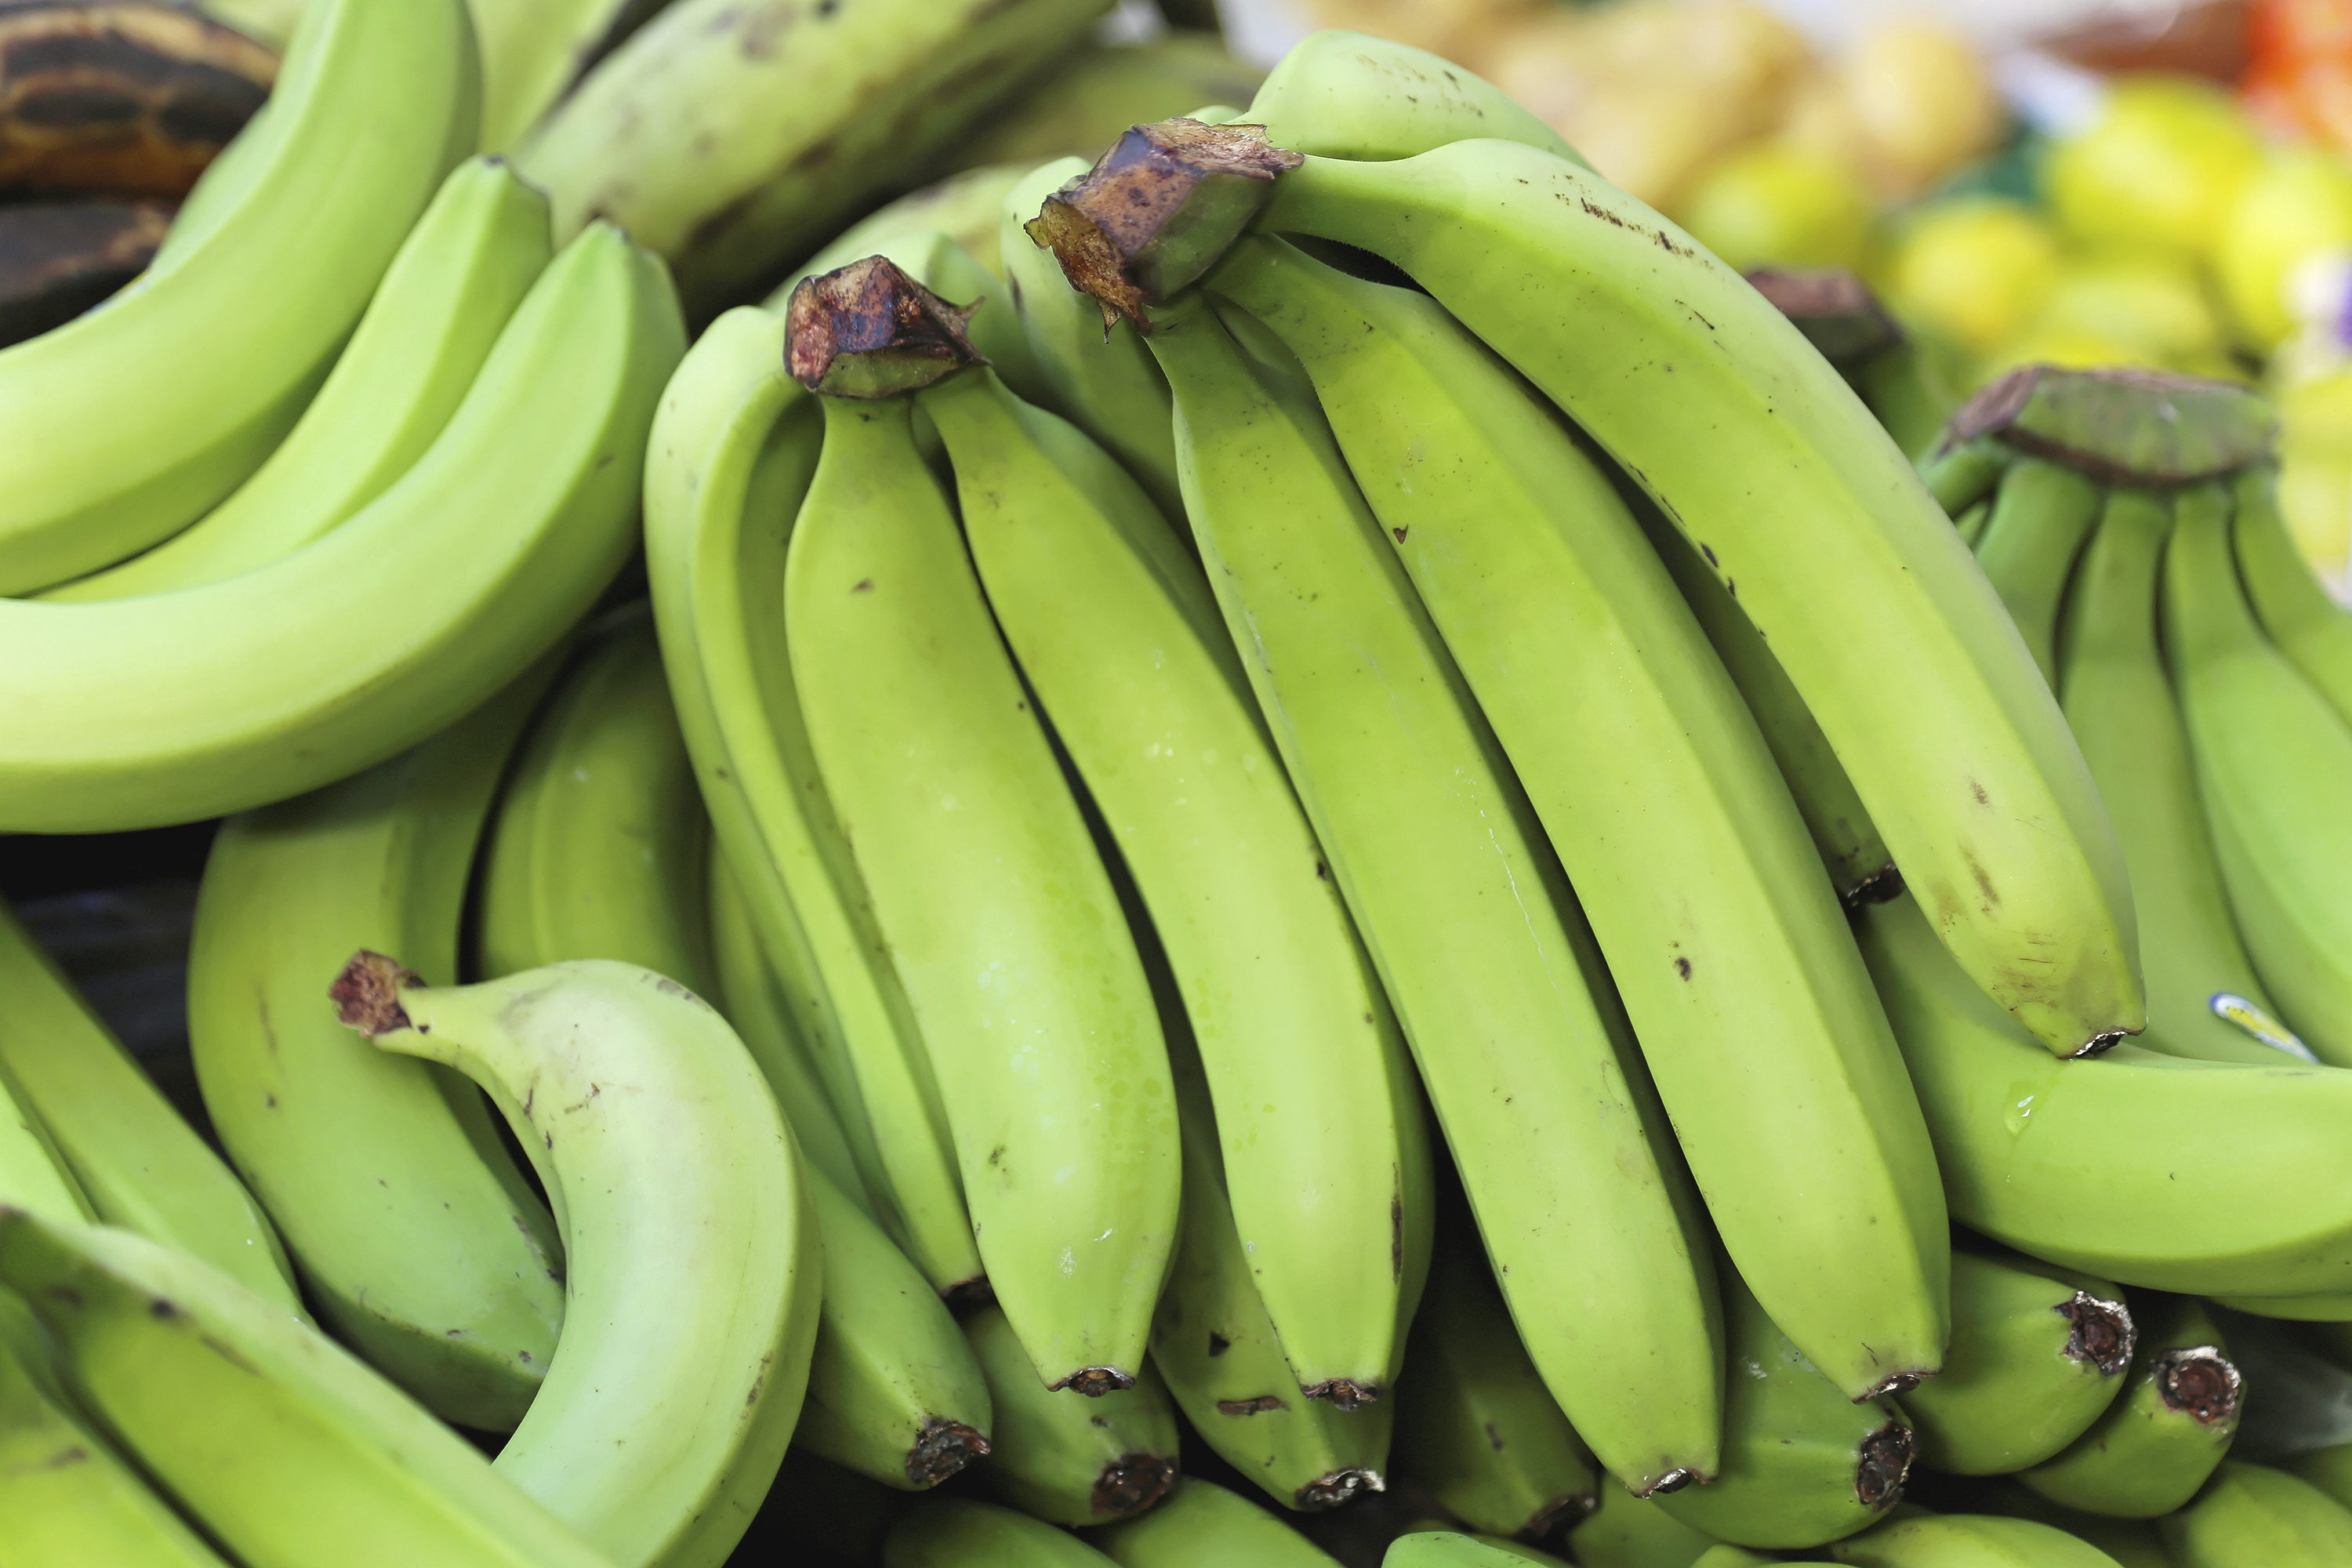 Green banana photo